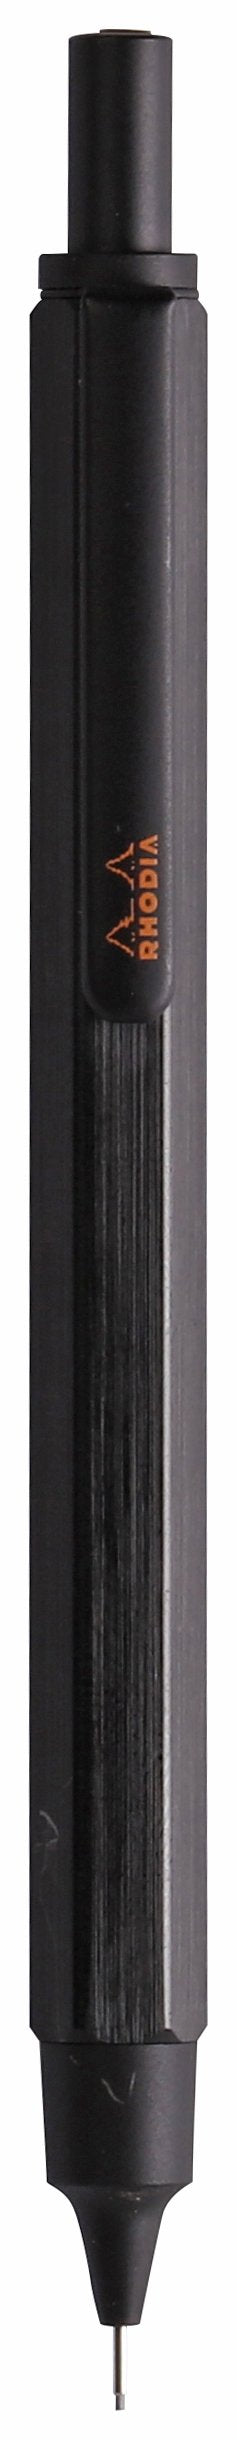 Rhodia scRipt Mechanical Pencil 0.5 mm